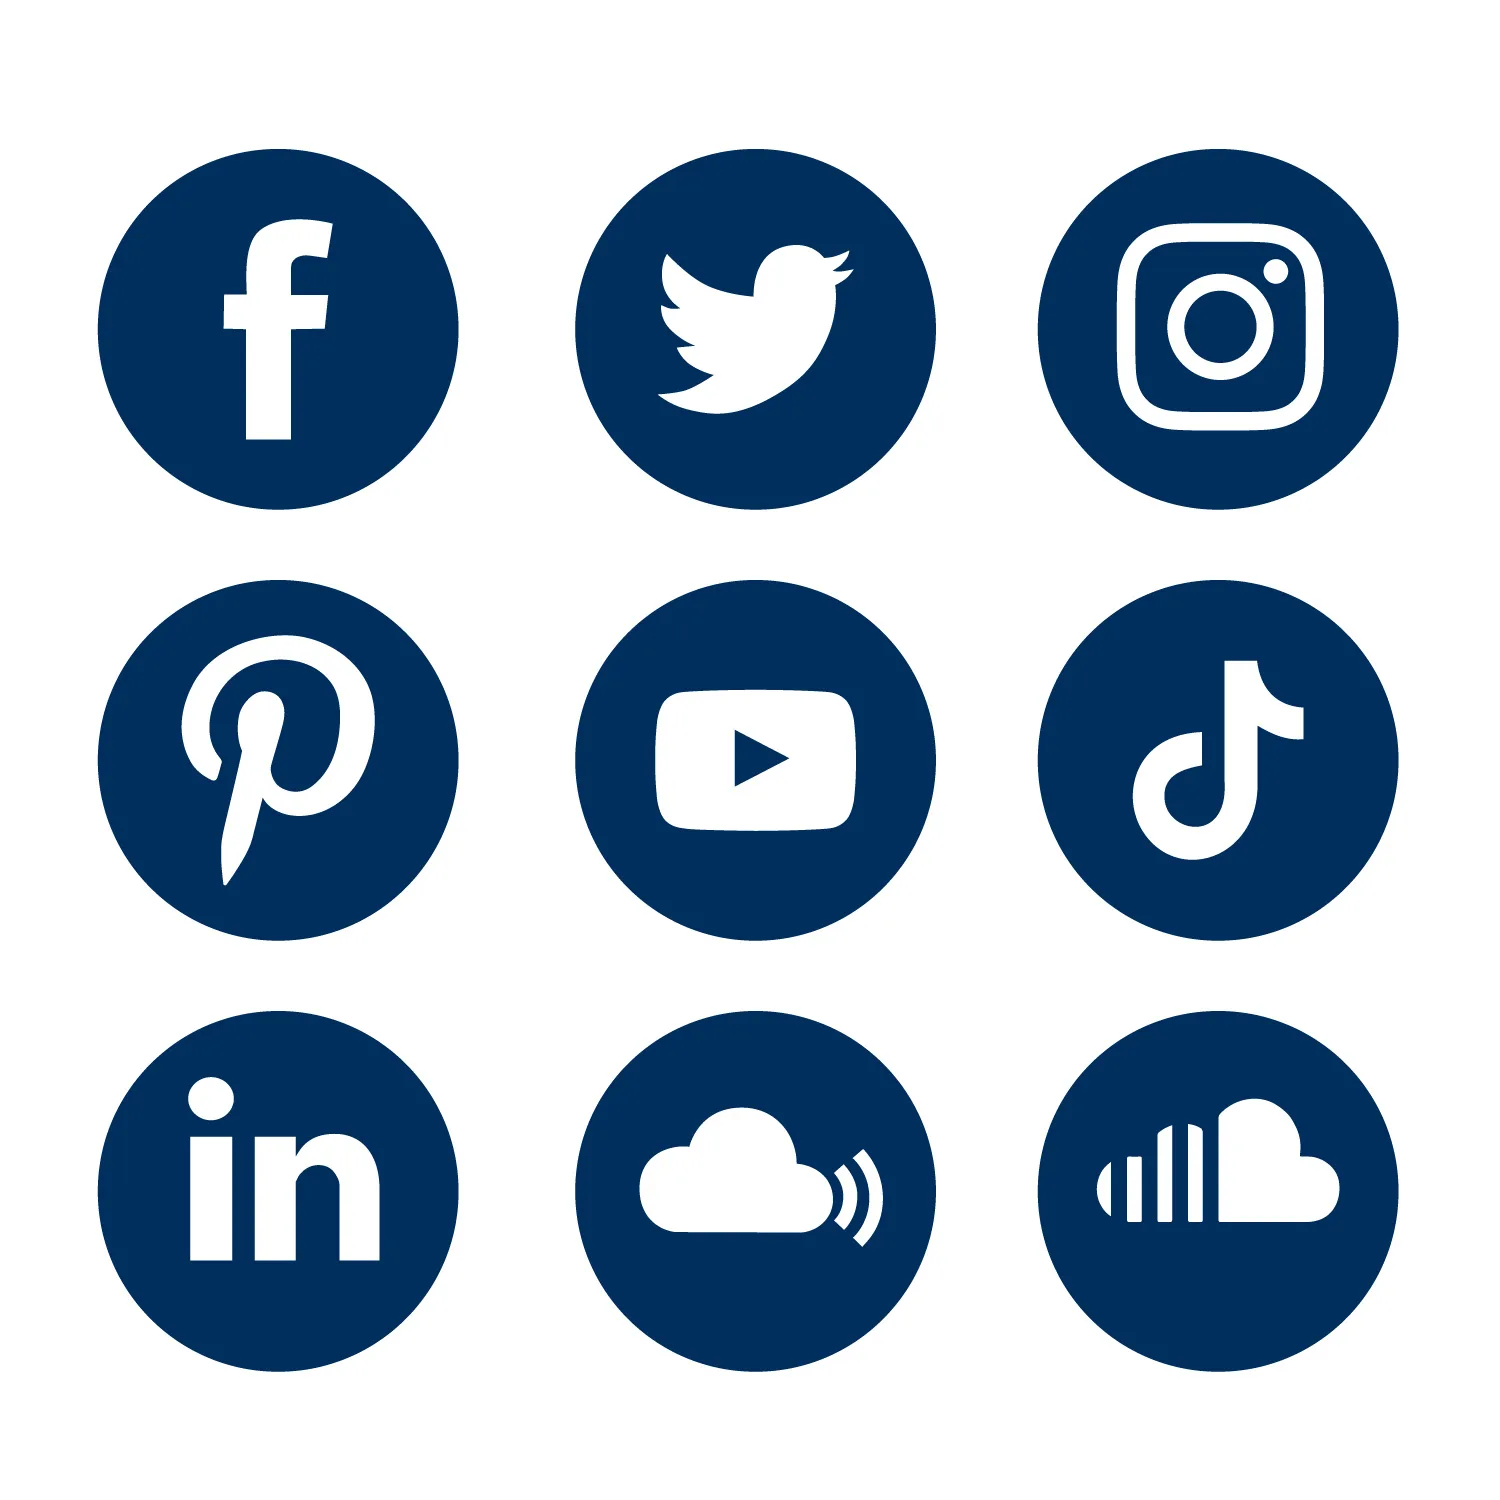 Navy round square social media icons - ready to use